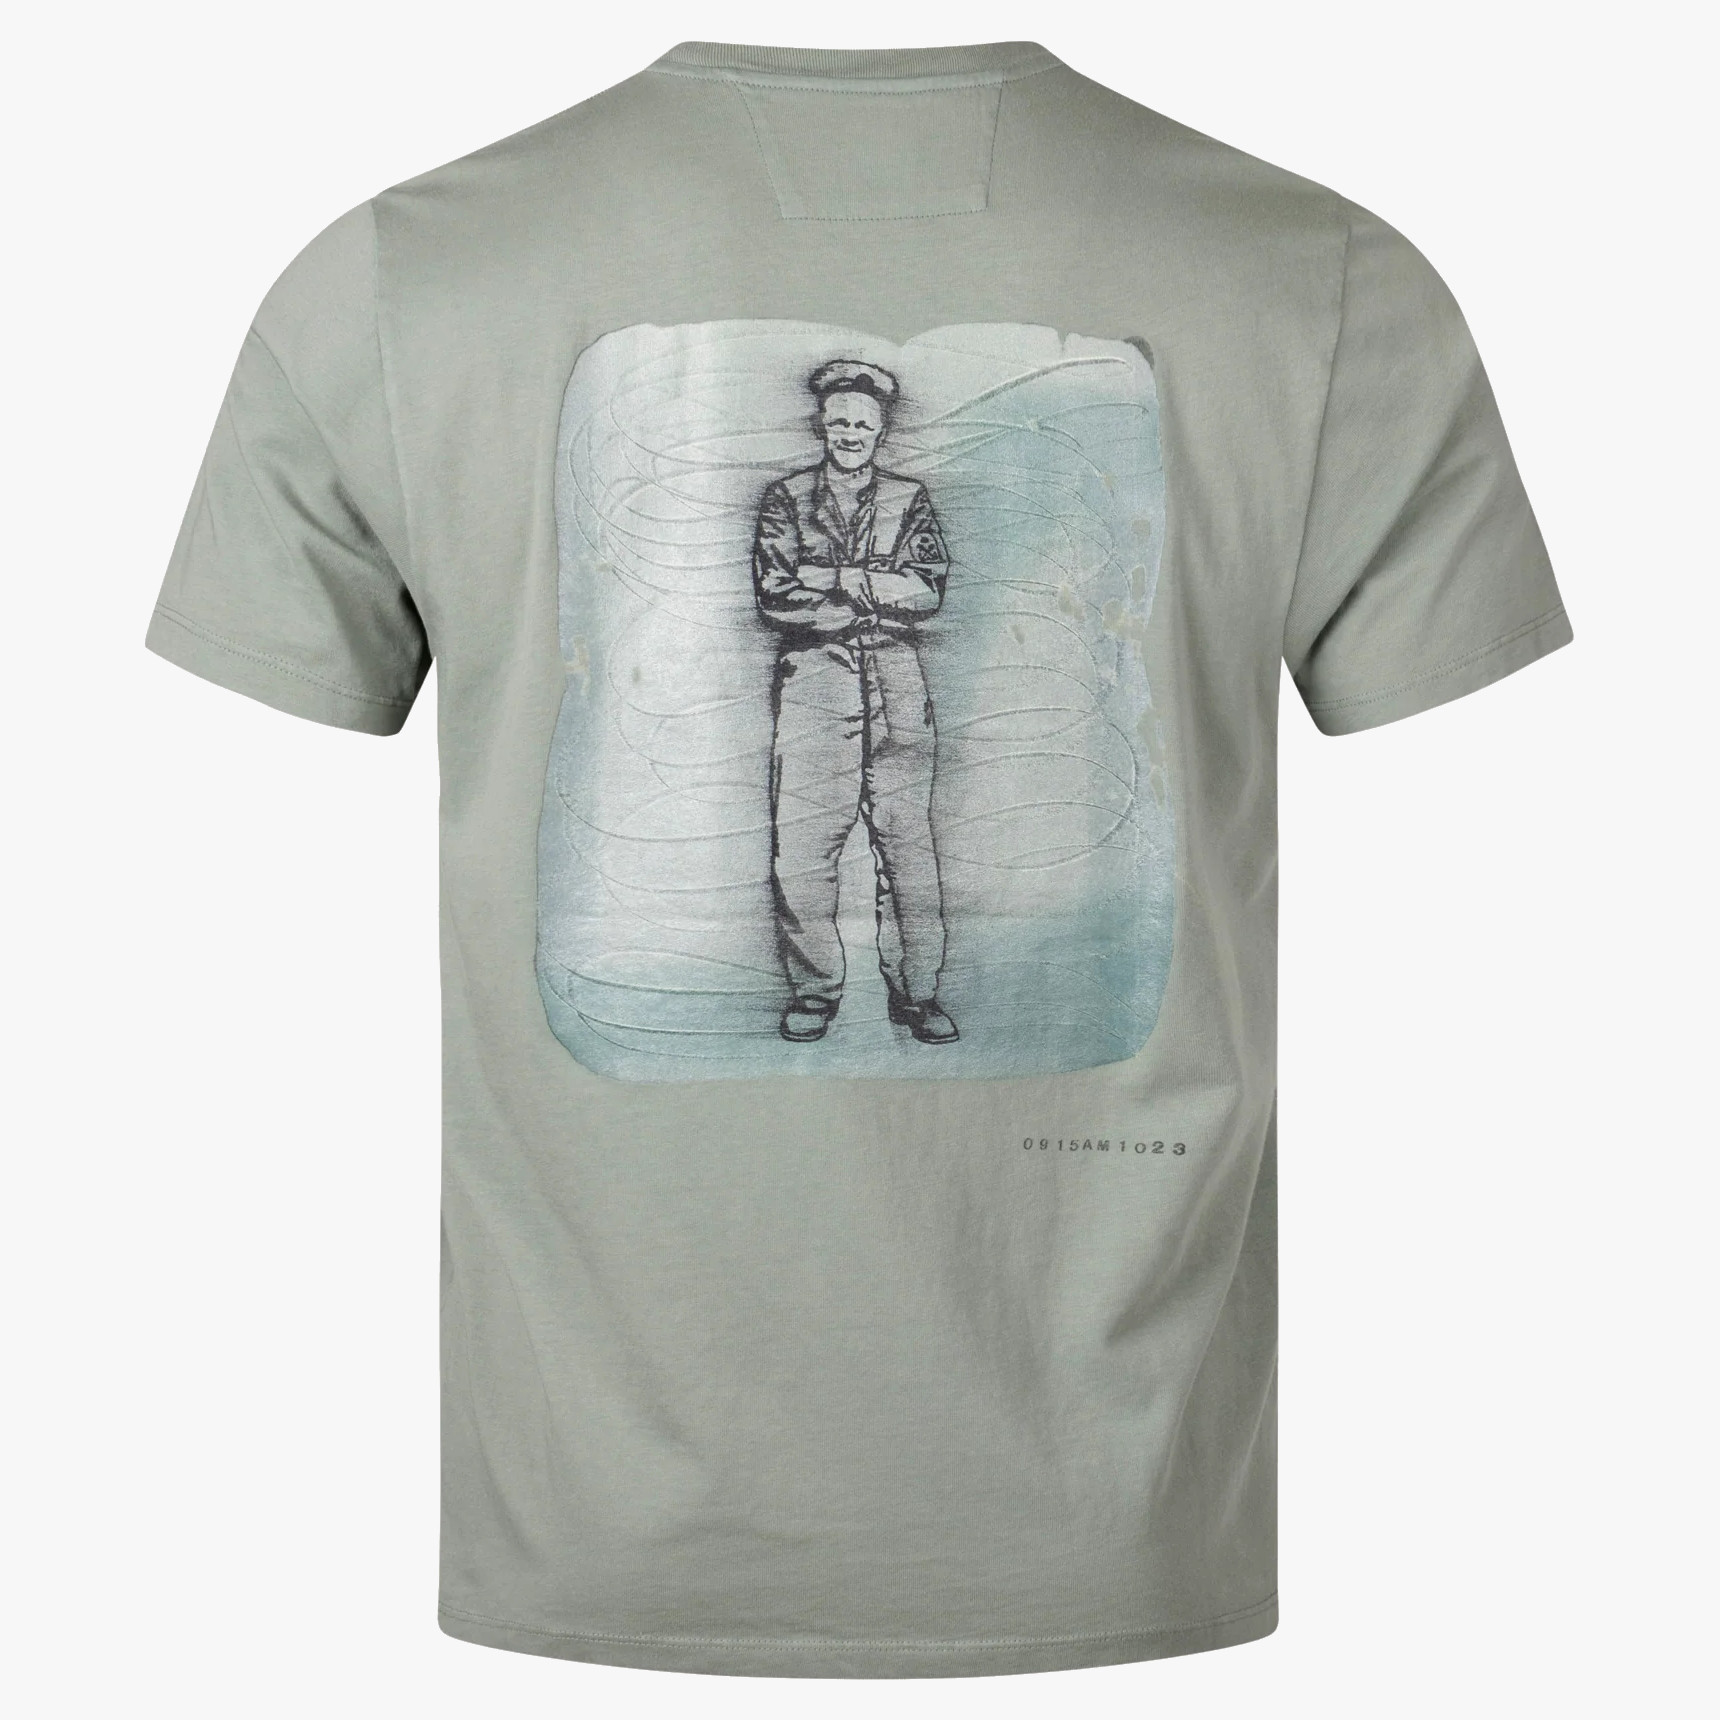 C.P. Company British Sailor Back Print T-Shirt Agave Green